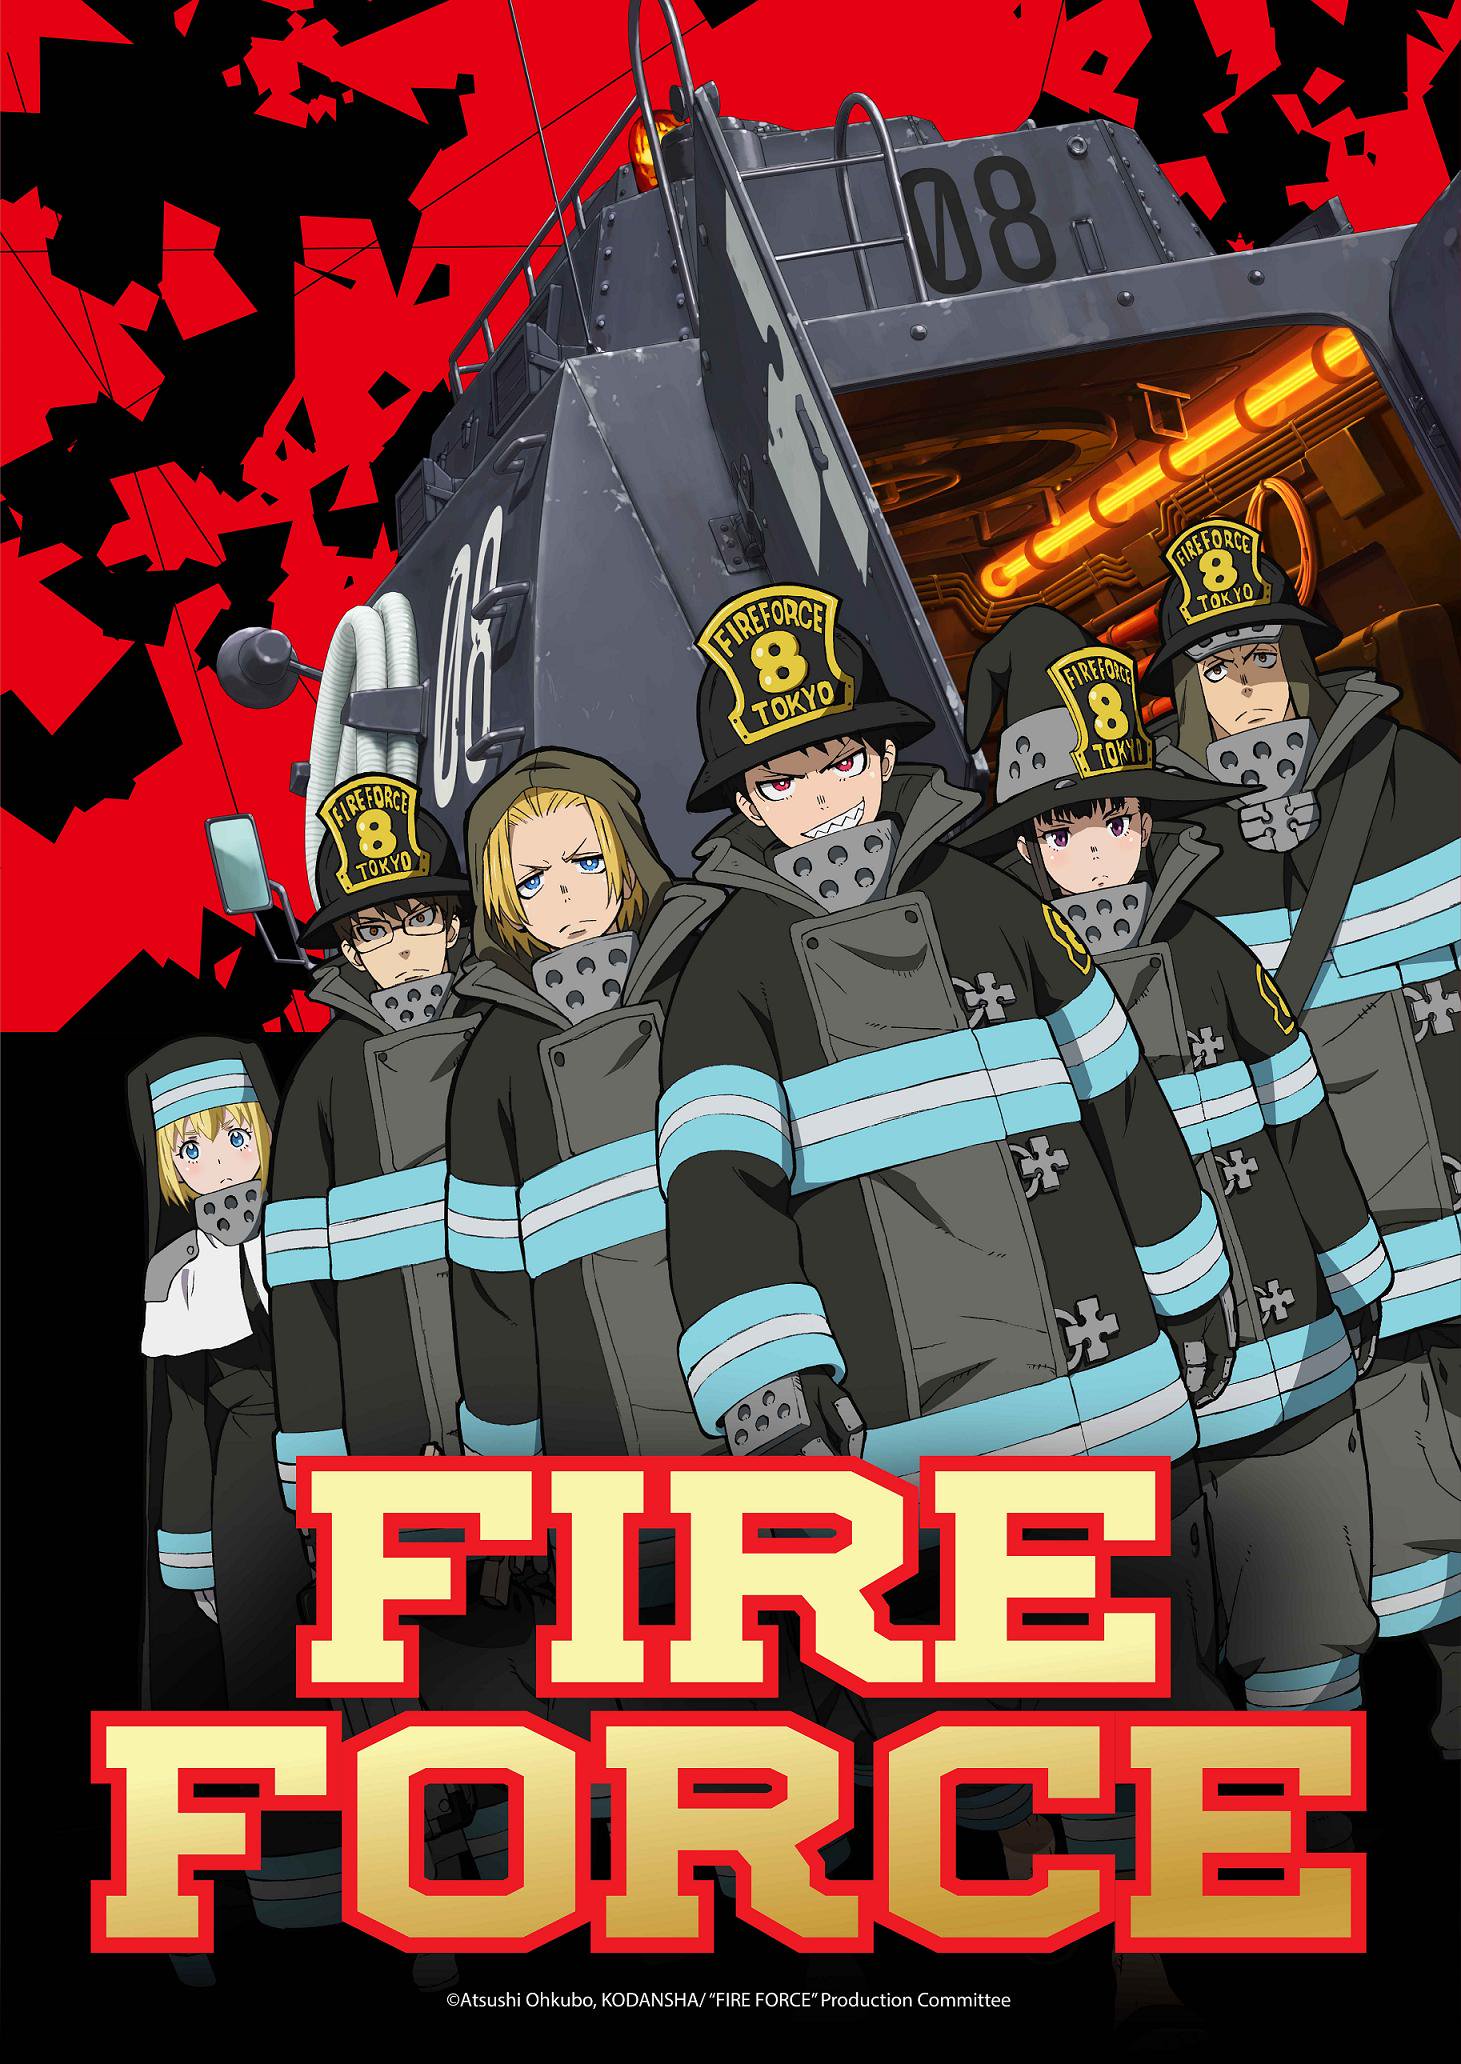 Fire Force Season 3 Officially Announced - Crunchyroll News